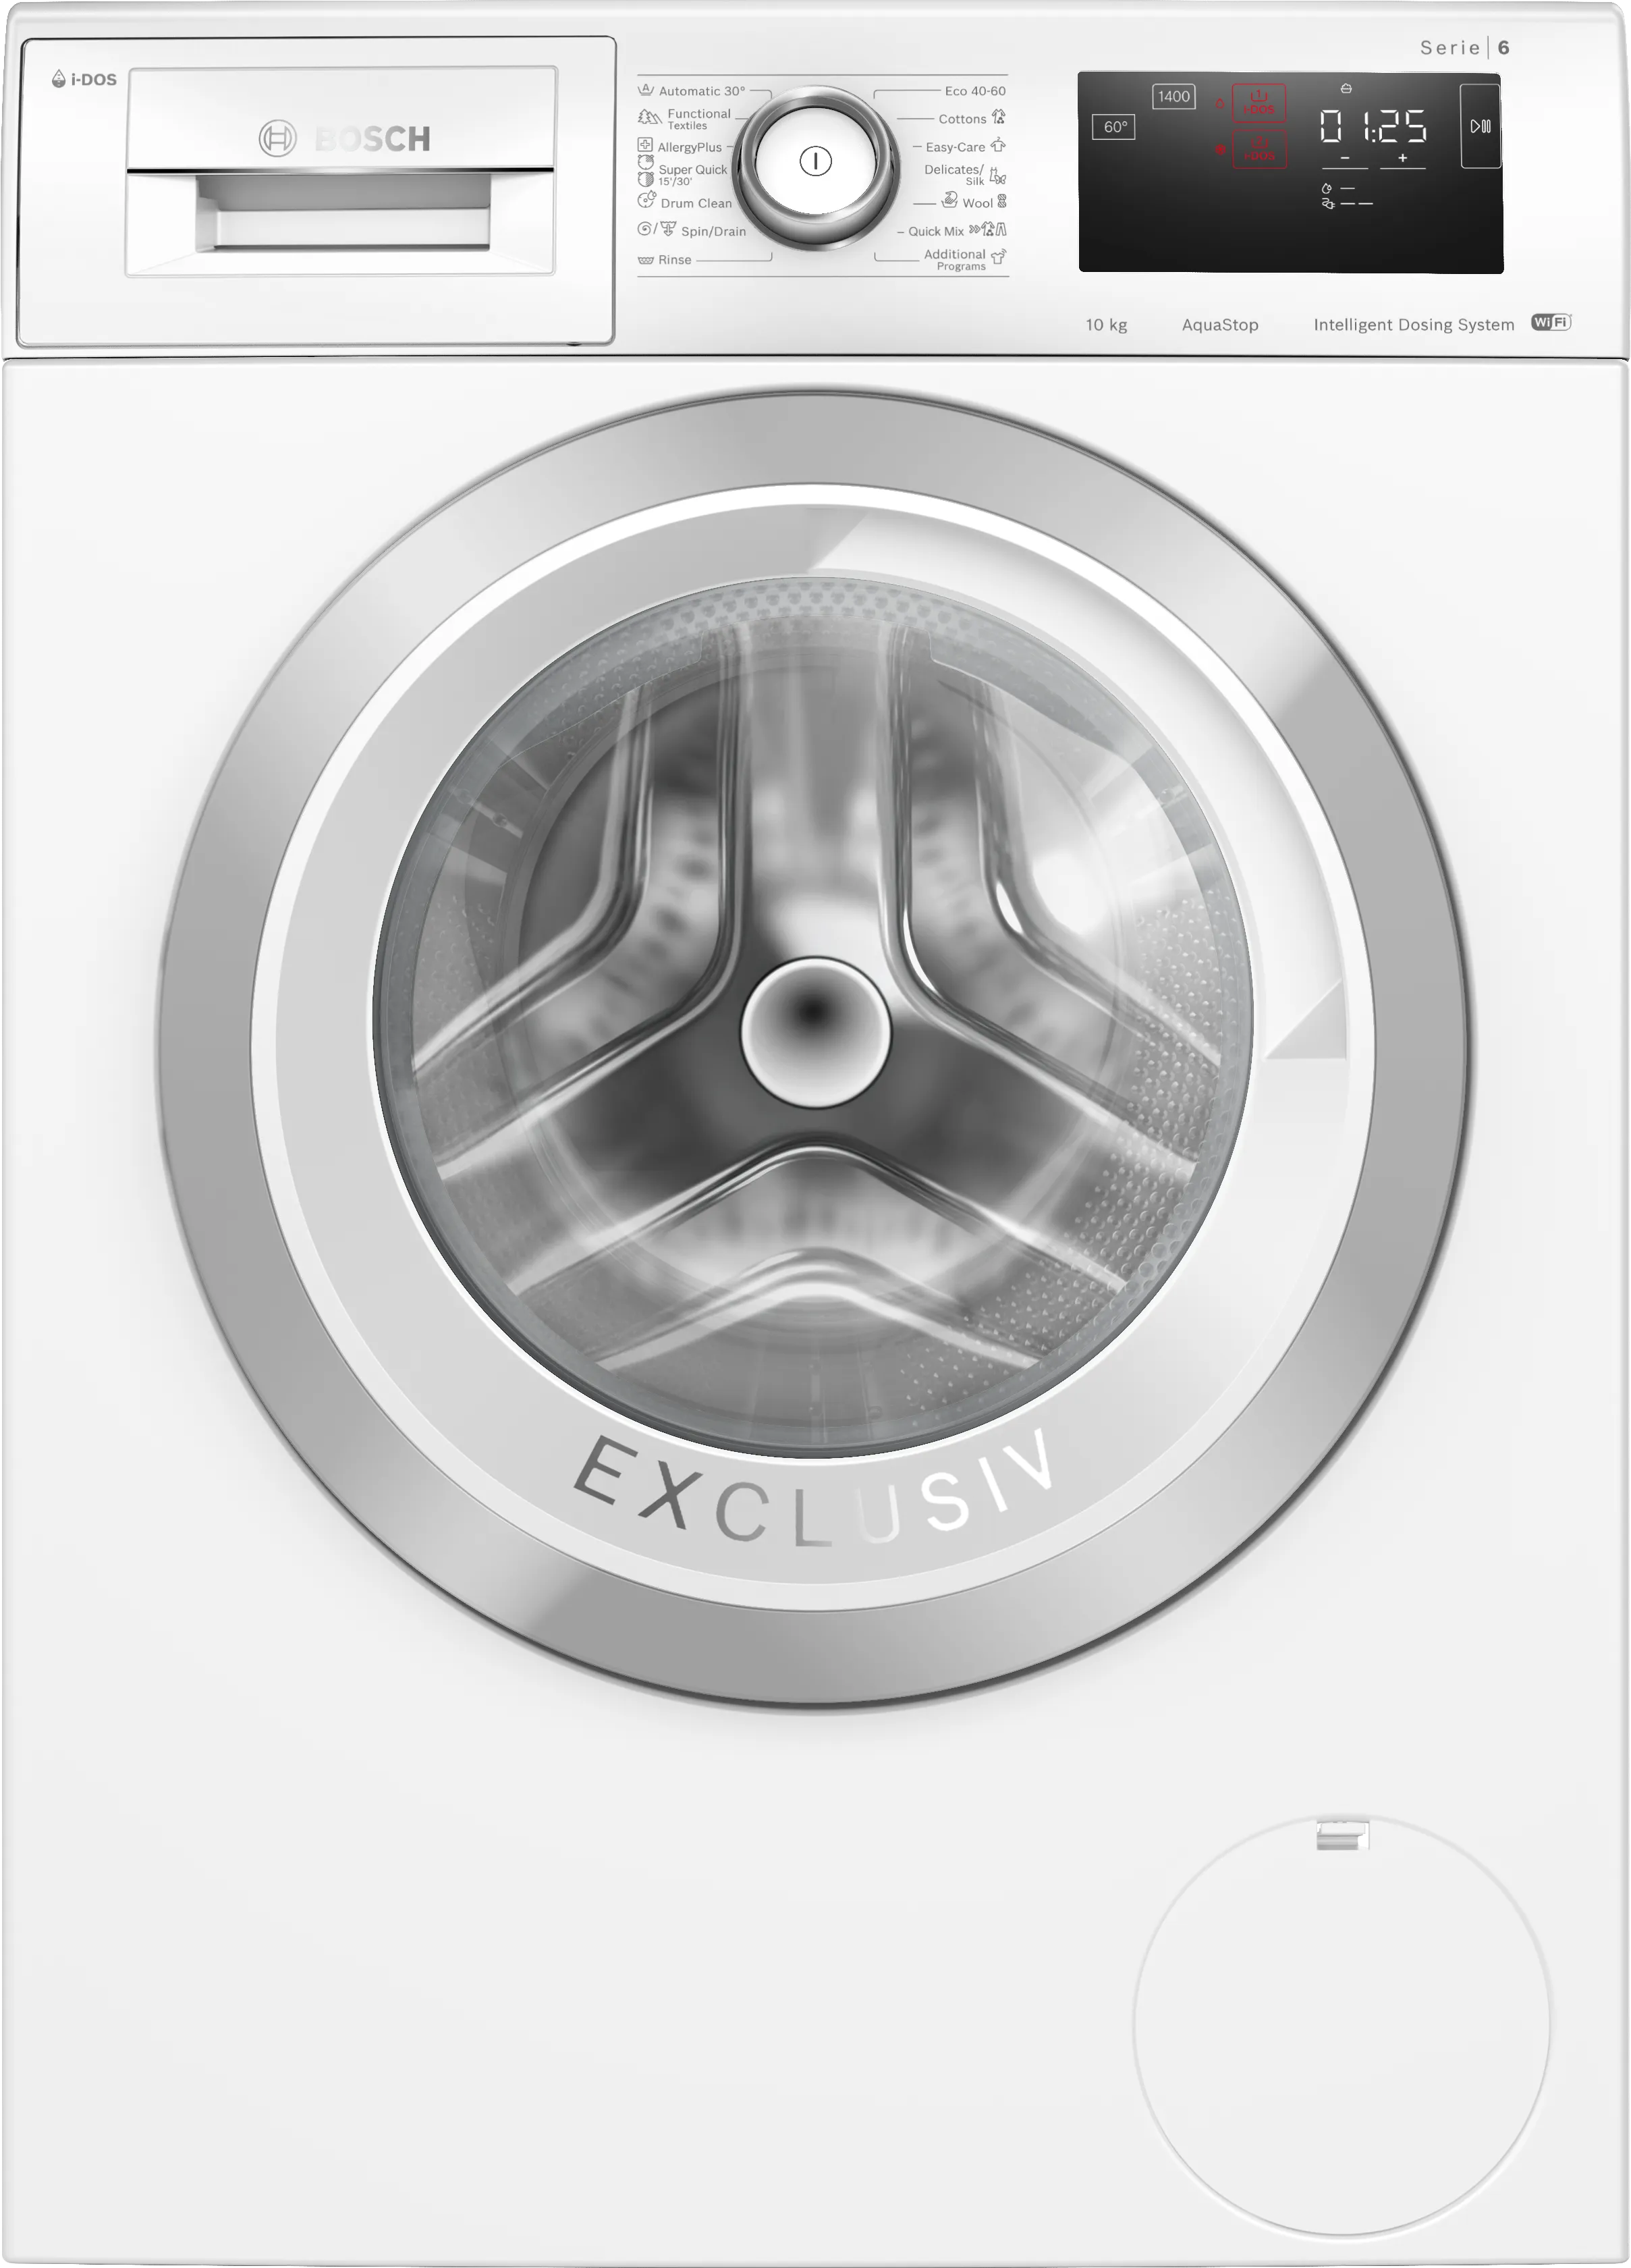 Serija 6 Mašina za pranje veša, punjenje spreda 10 kg 1400 okr 